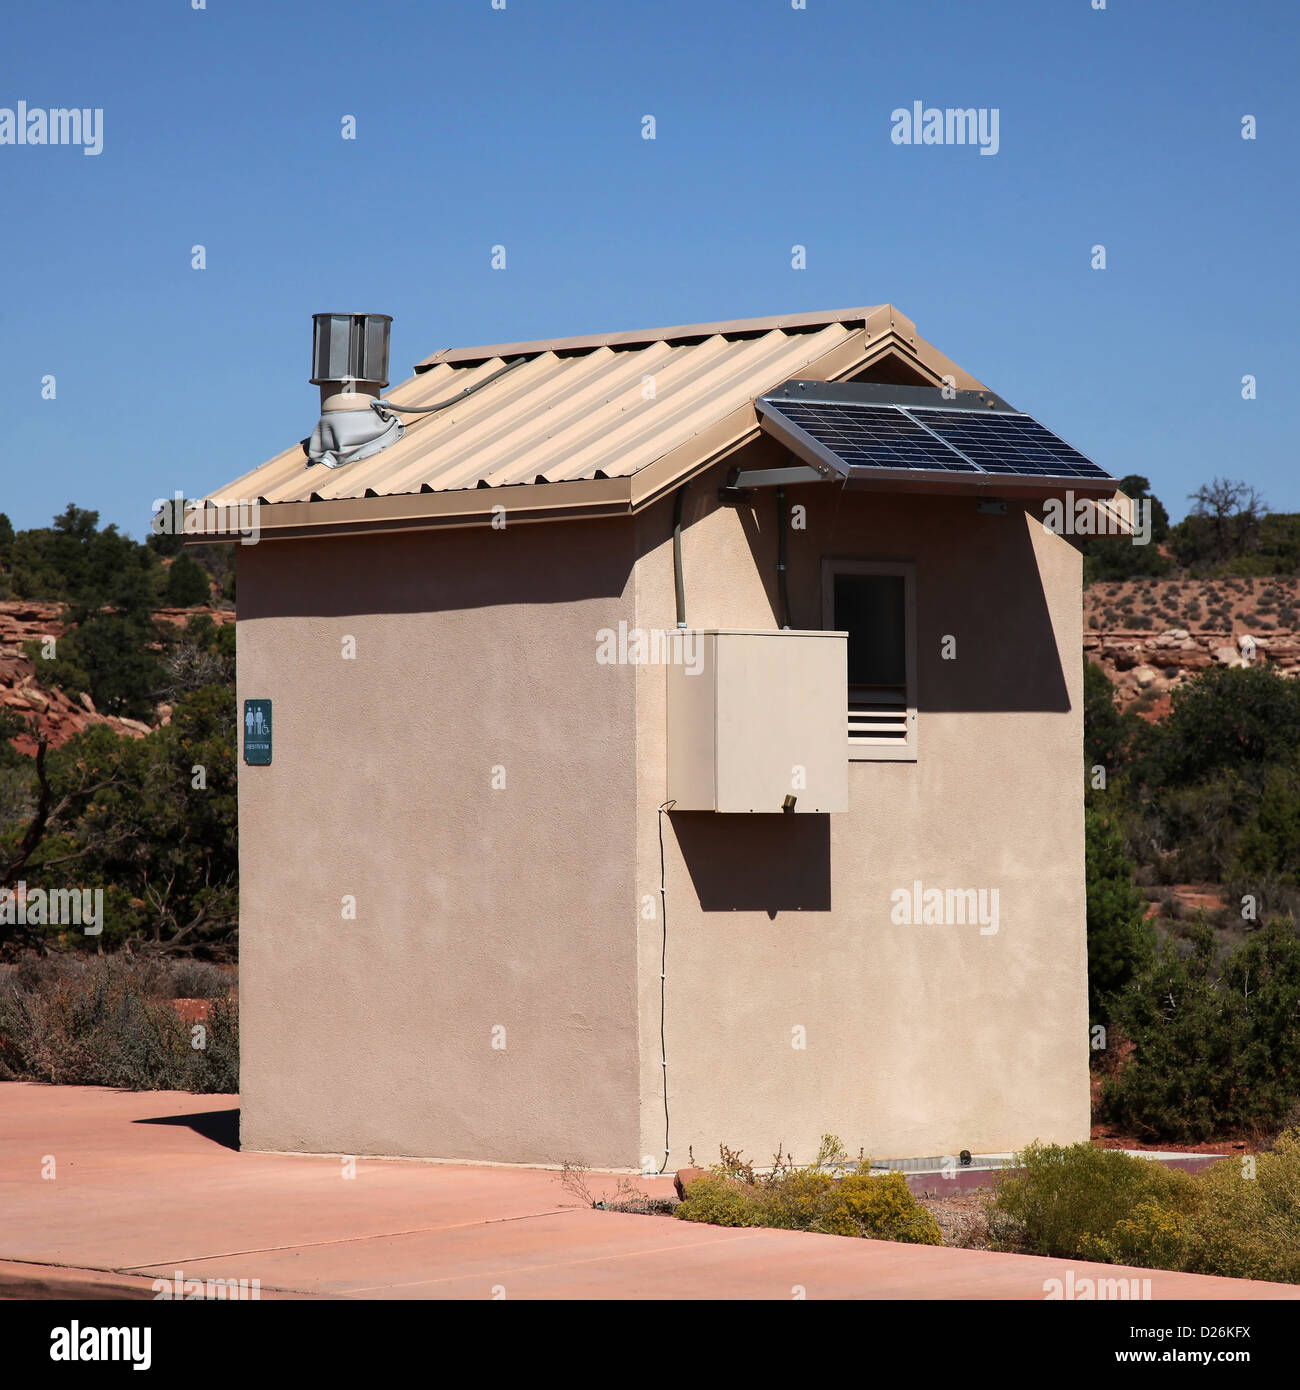 Solar powered outhouse Stock Photo